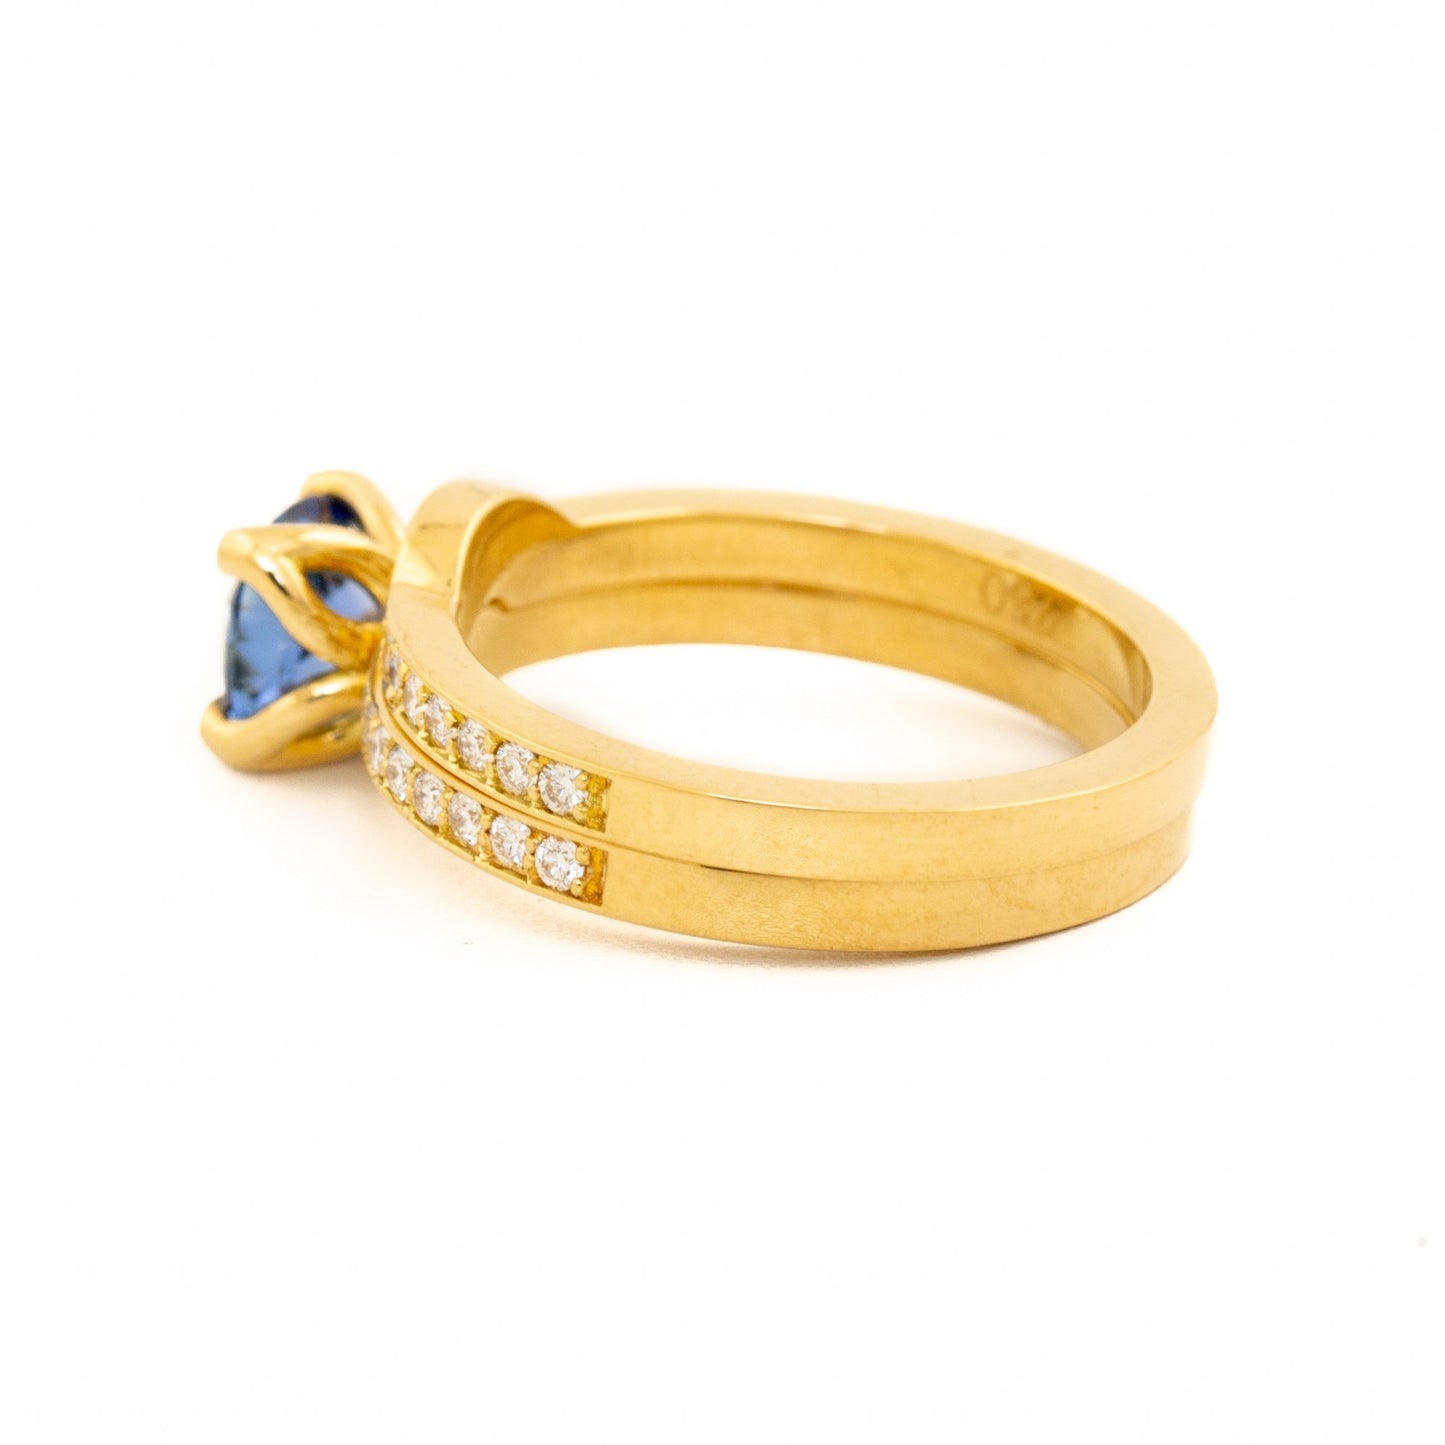 Diamond & Sapphire Wedding Suite - Kingdom Jewelry